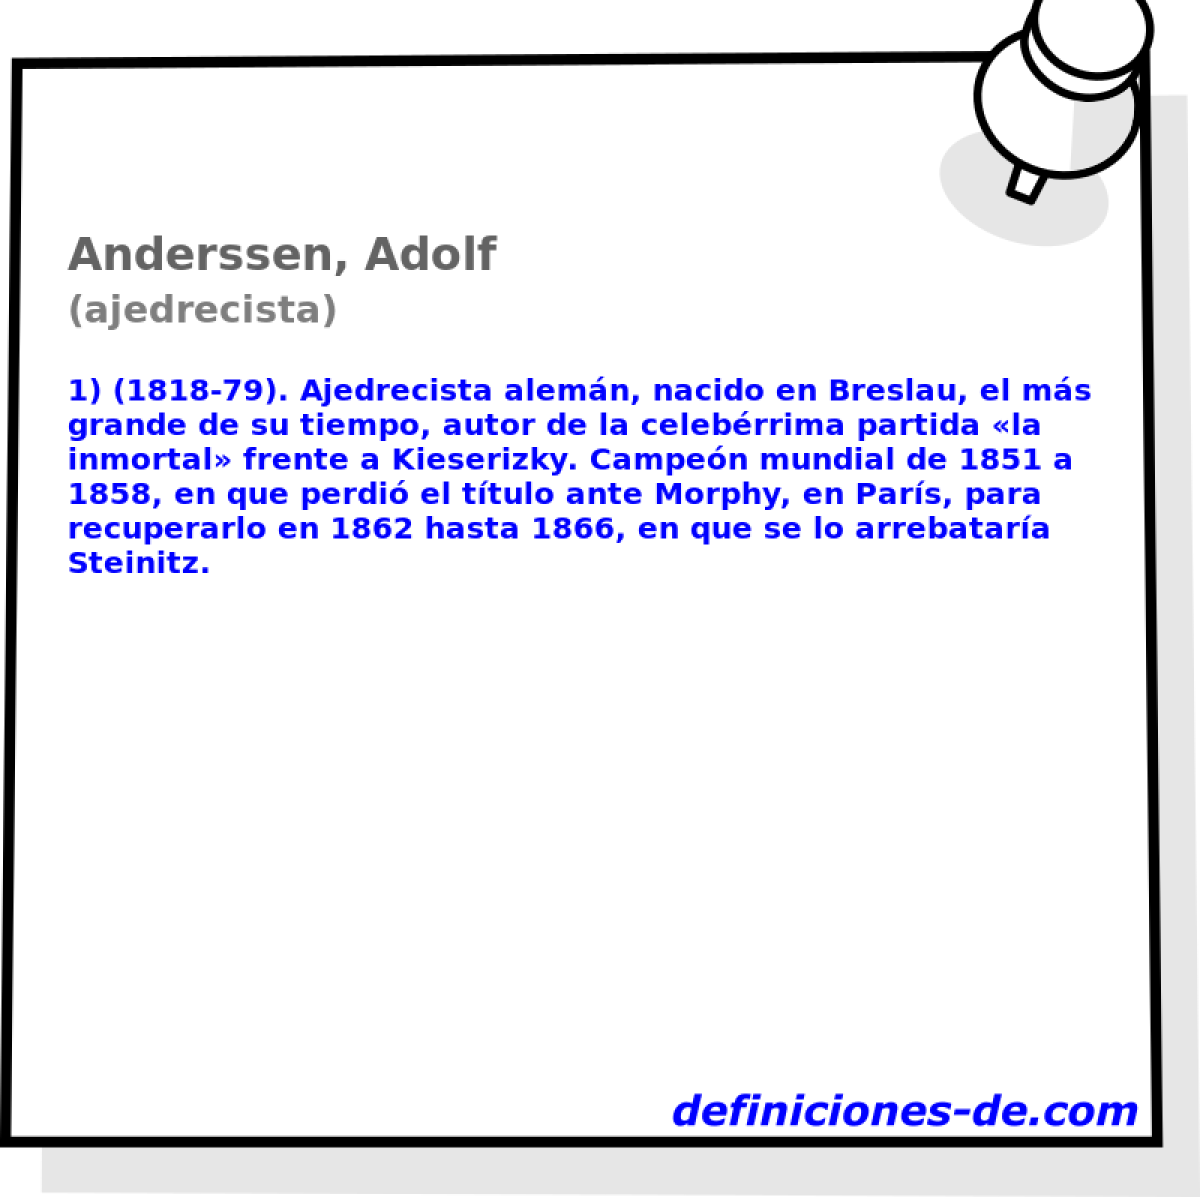 Anderssen, Adolf (ajedrecista)